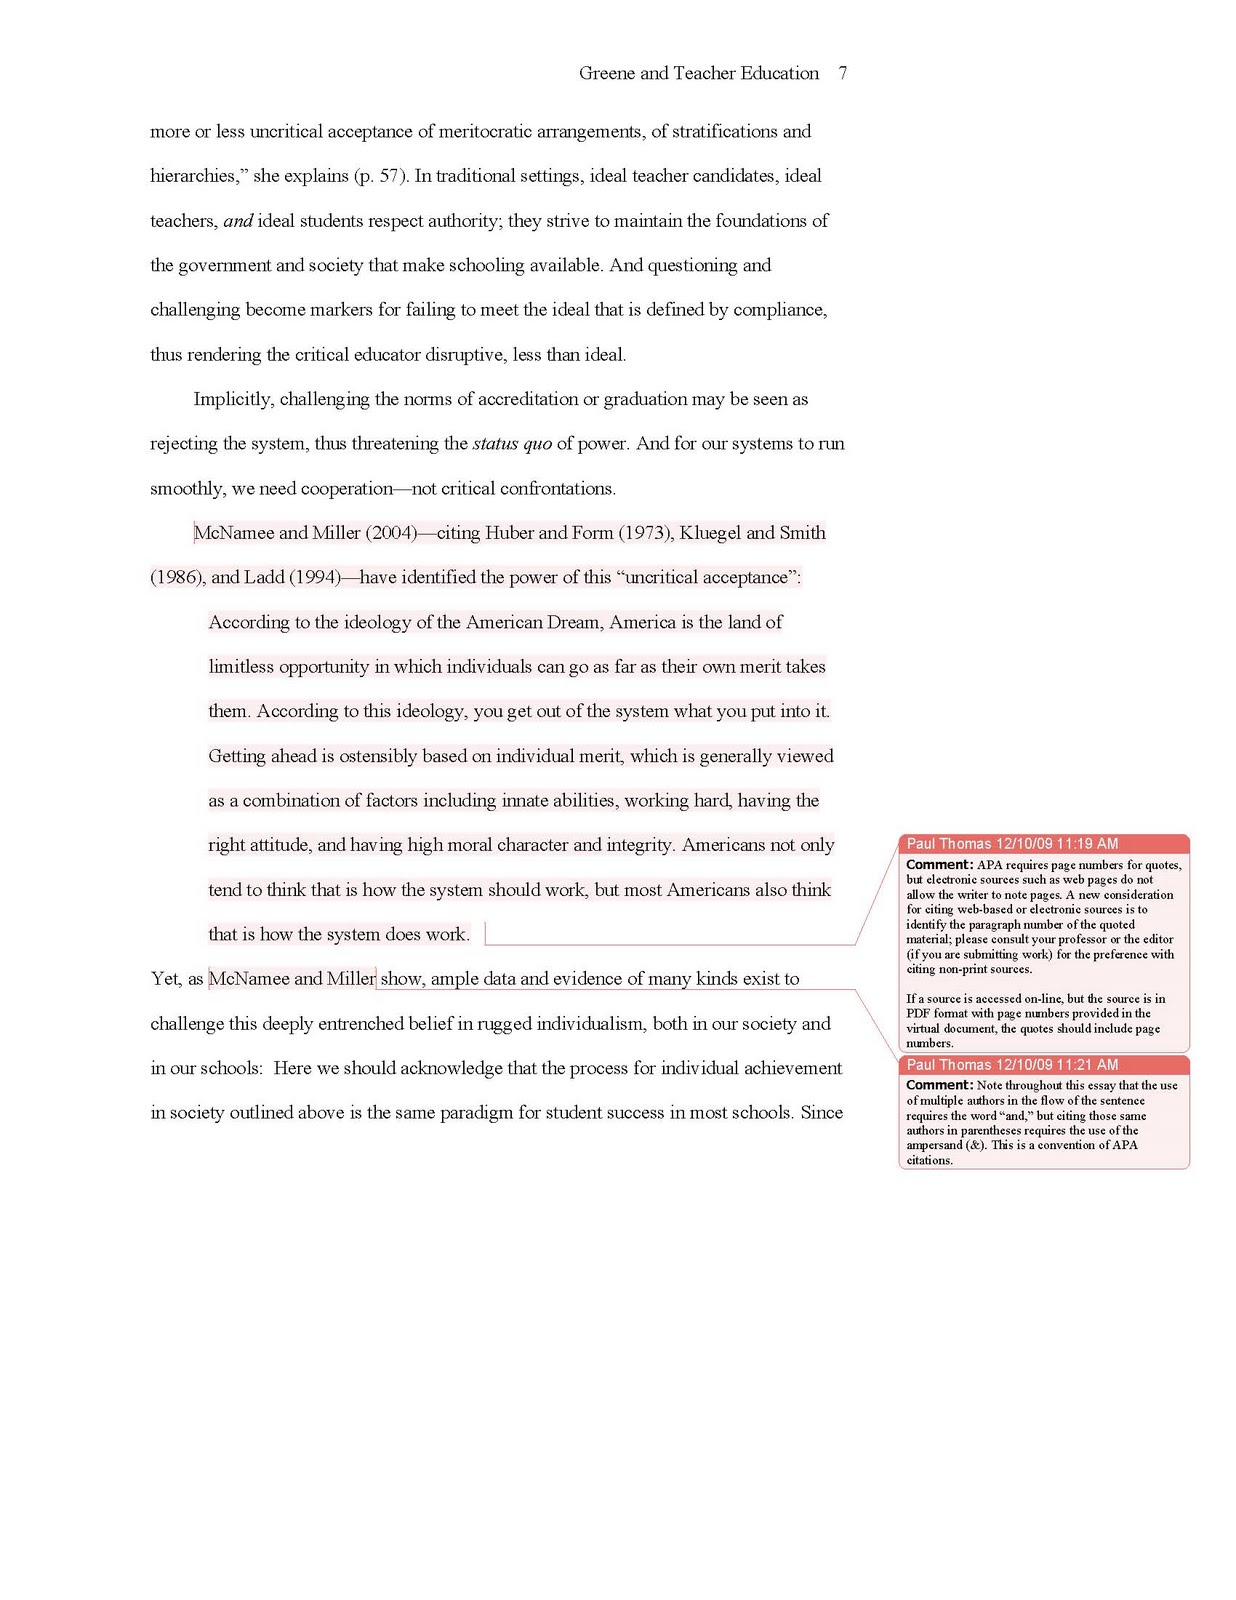 Apa format essay example paper